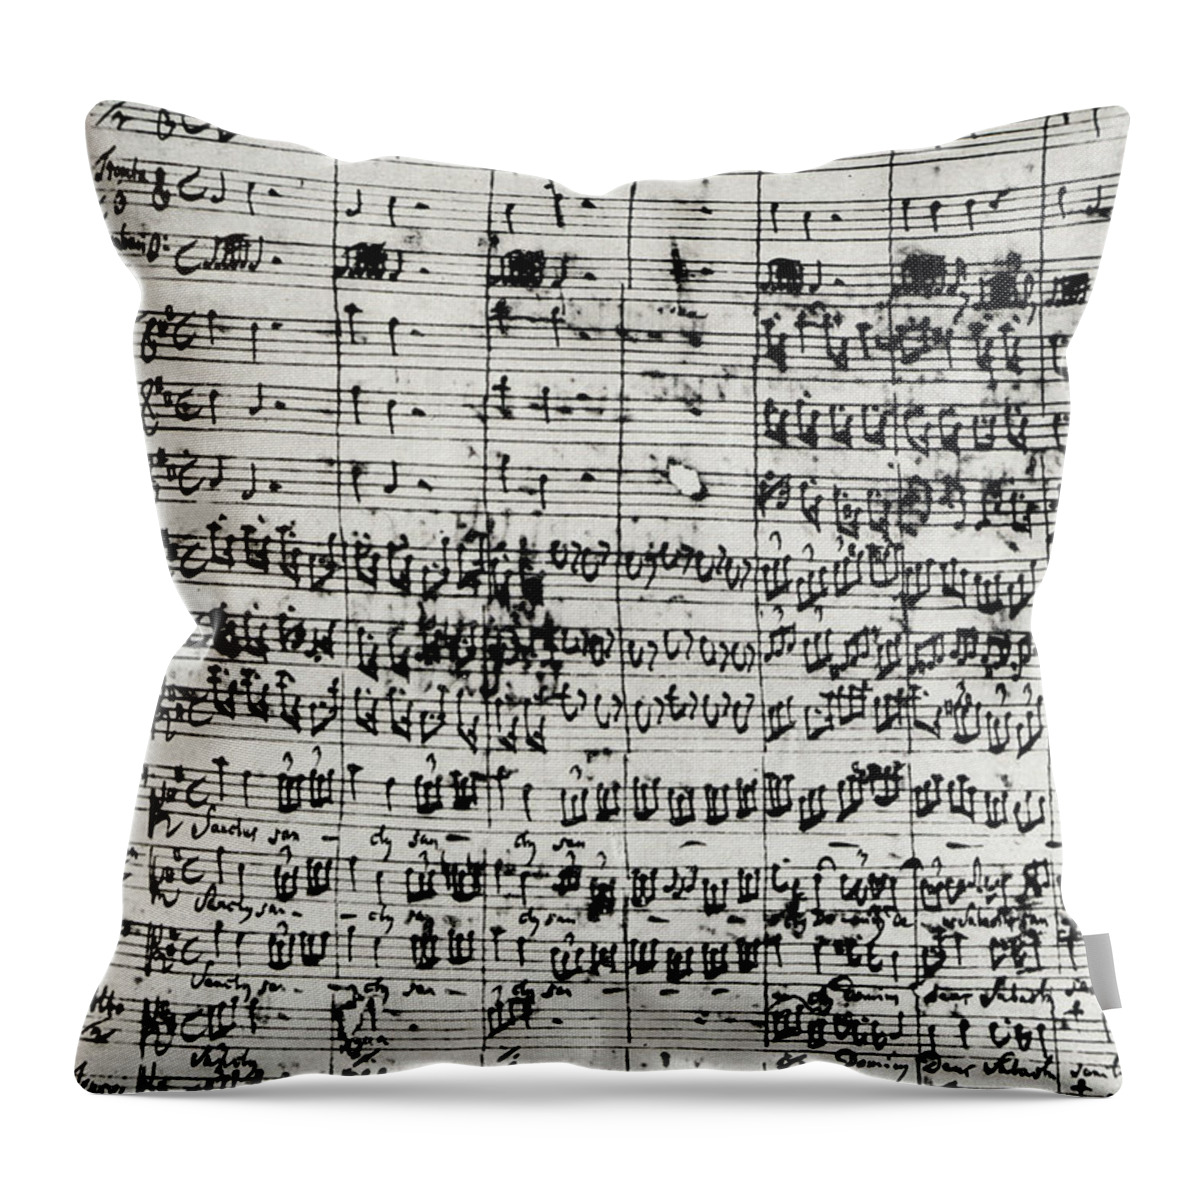 Bach Throw Pillow featuring the drawing Handwritten score for Mass in B minor by Johann Sebastian Bach